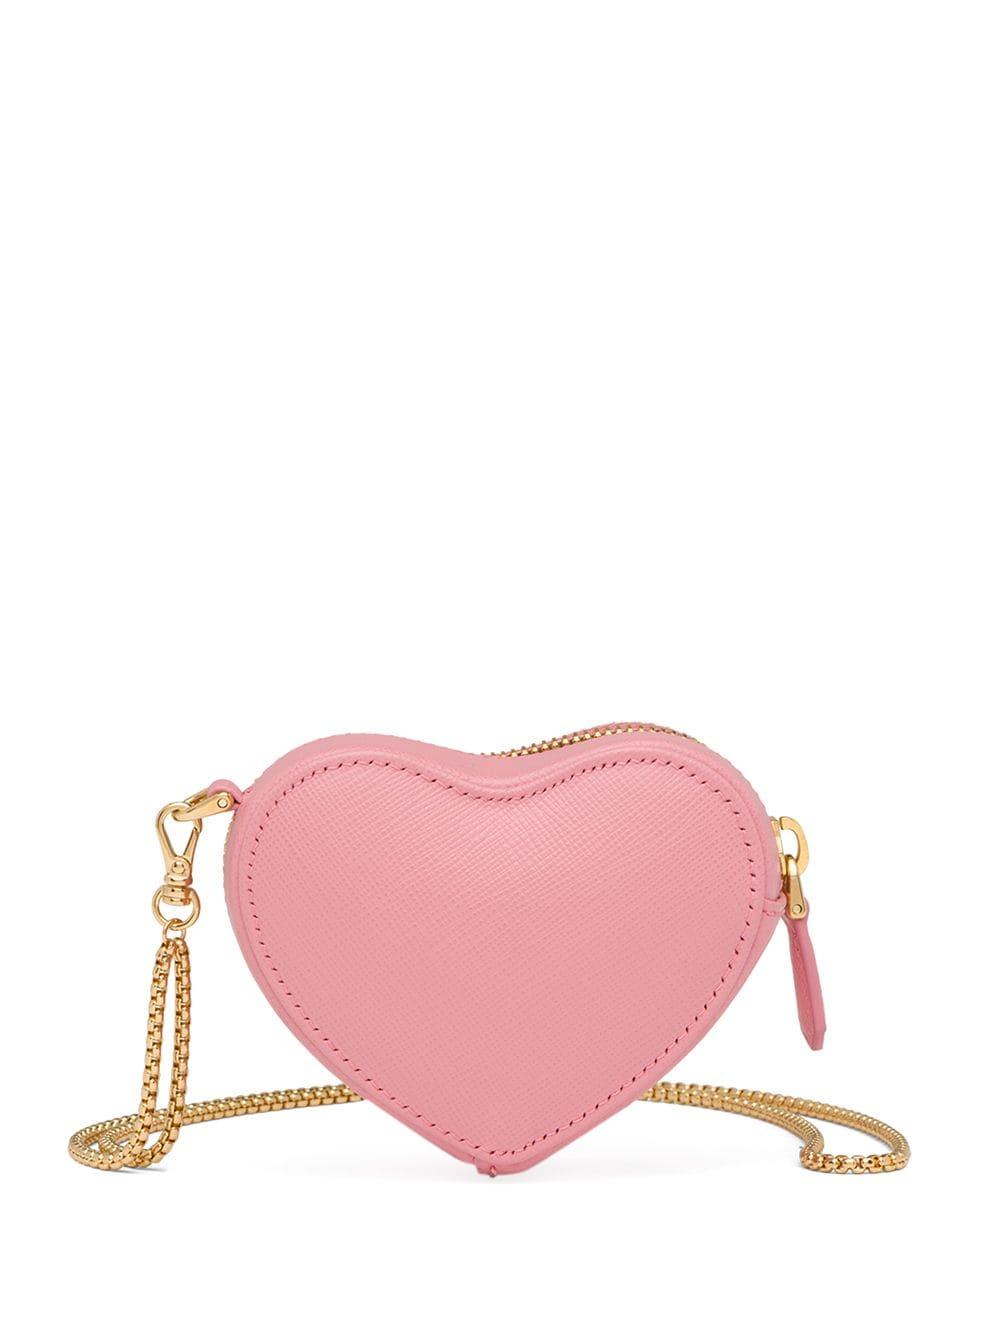 Prada Heart Shaped Wallet On Chain in Pink | Lyst